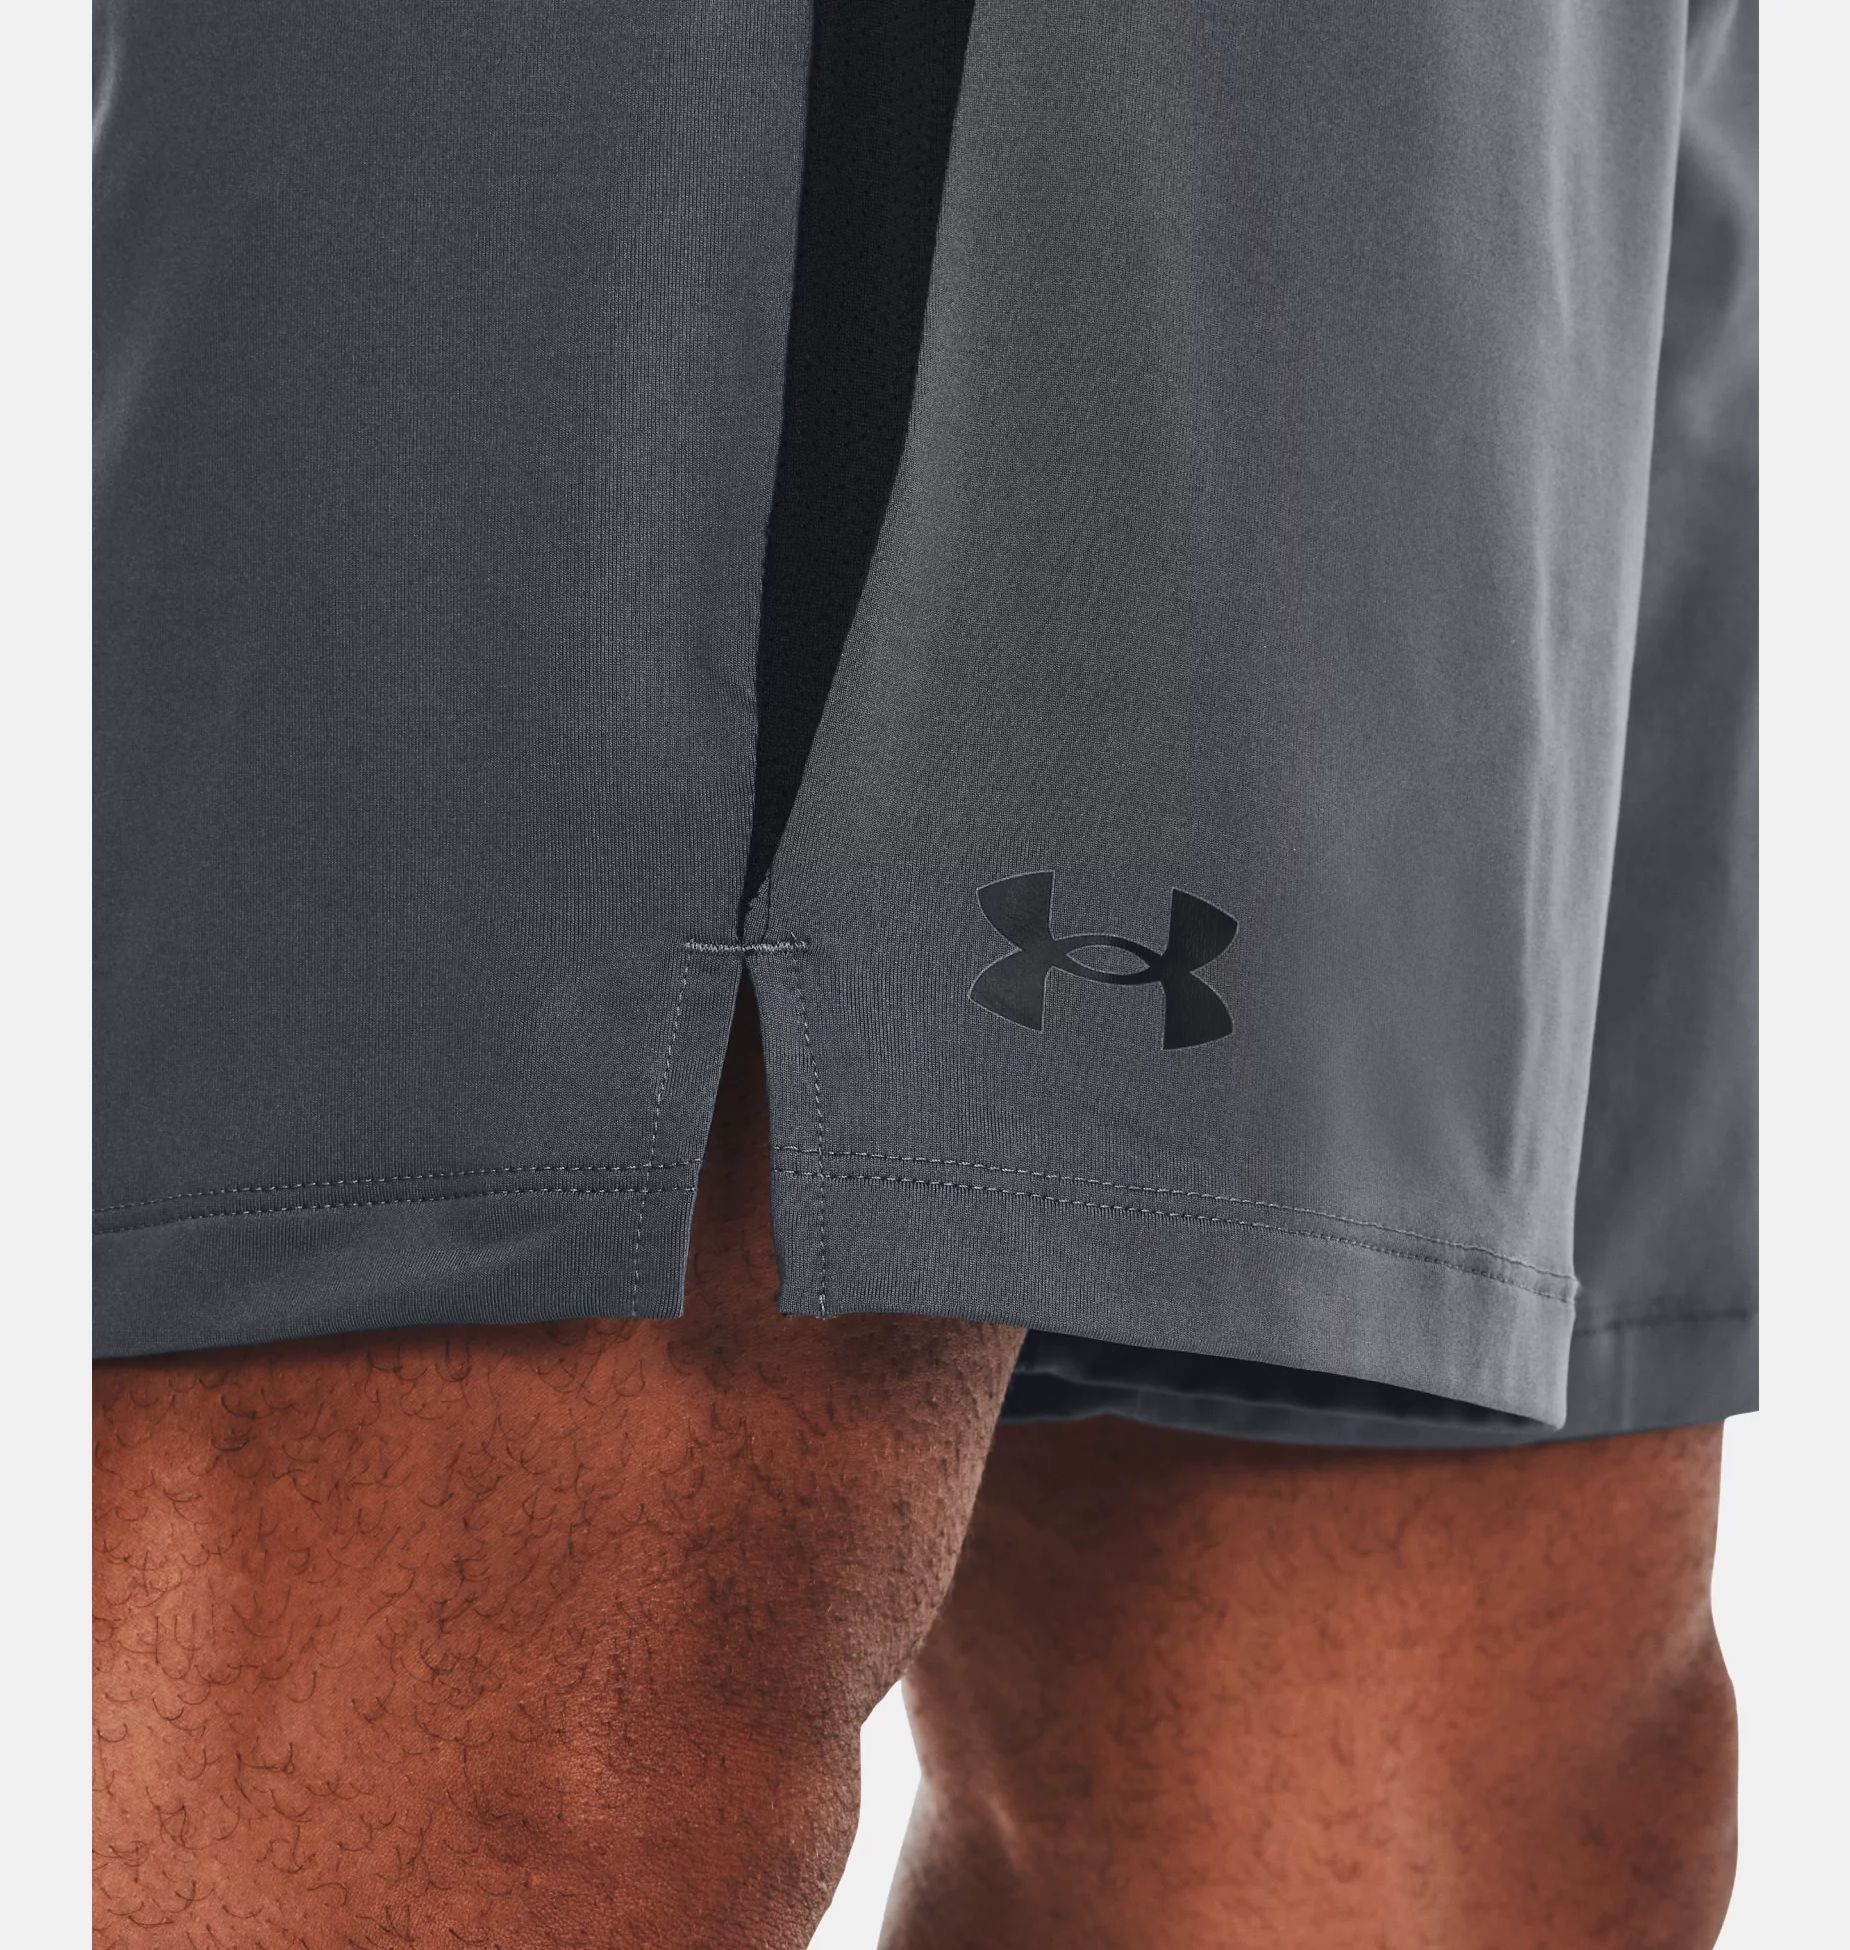 Shorts -  under armour Tech Vent Shorts